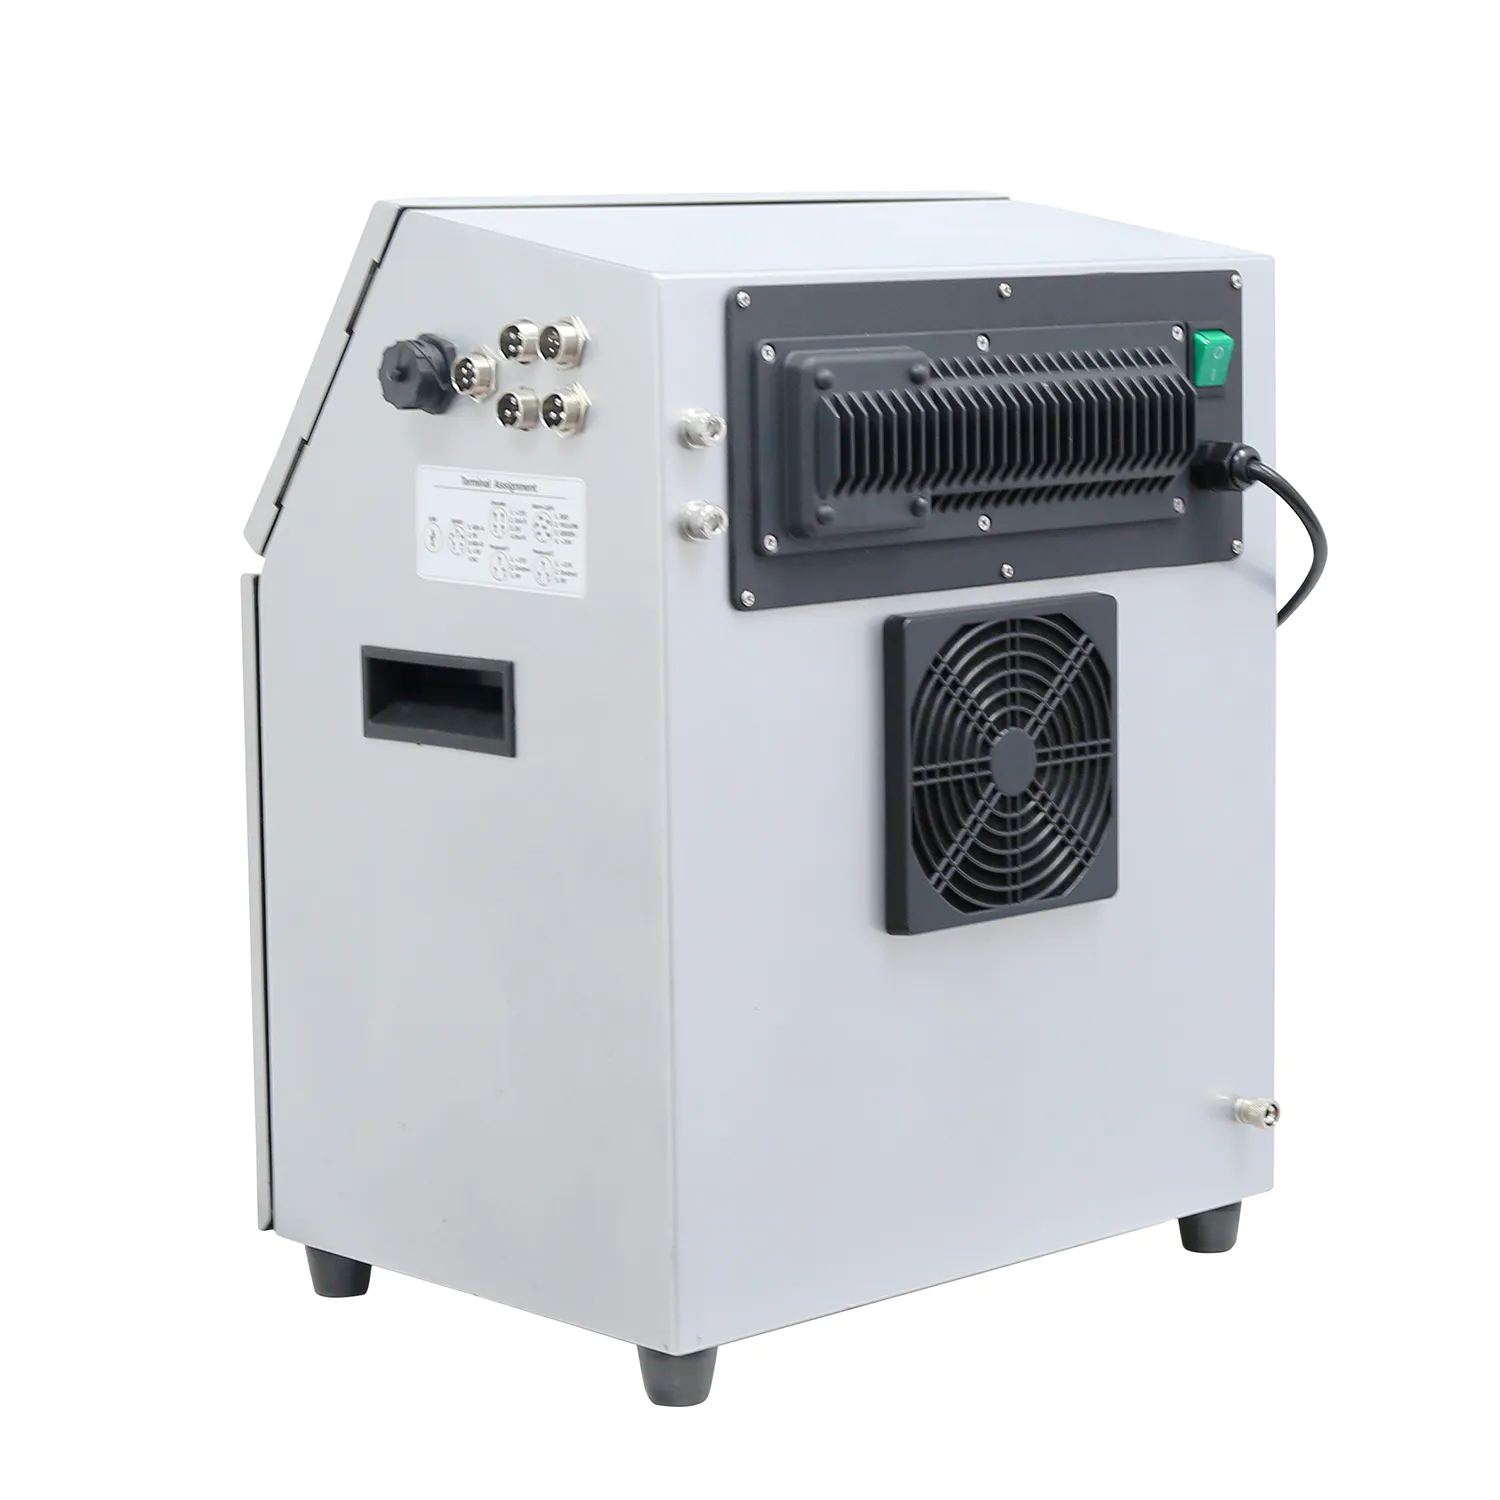 Leadtech Lt800 Marking Machine Laser Printer